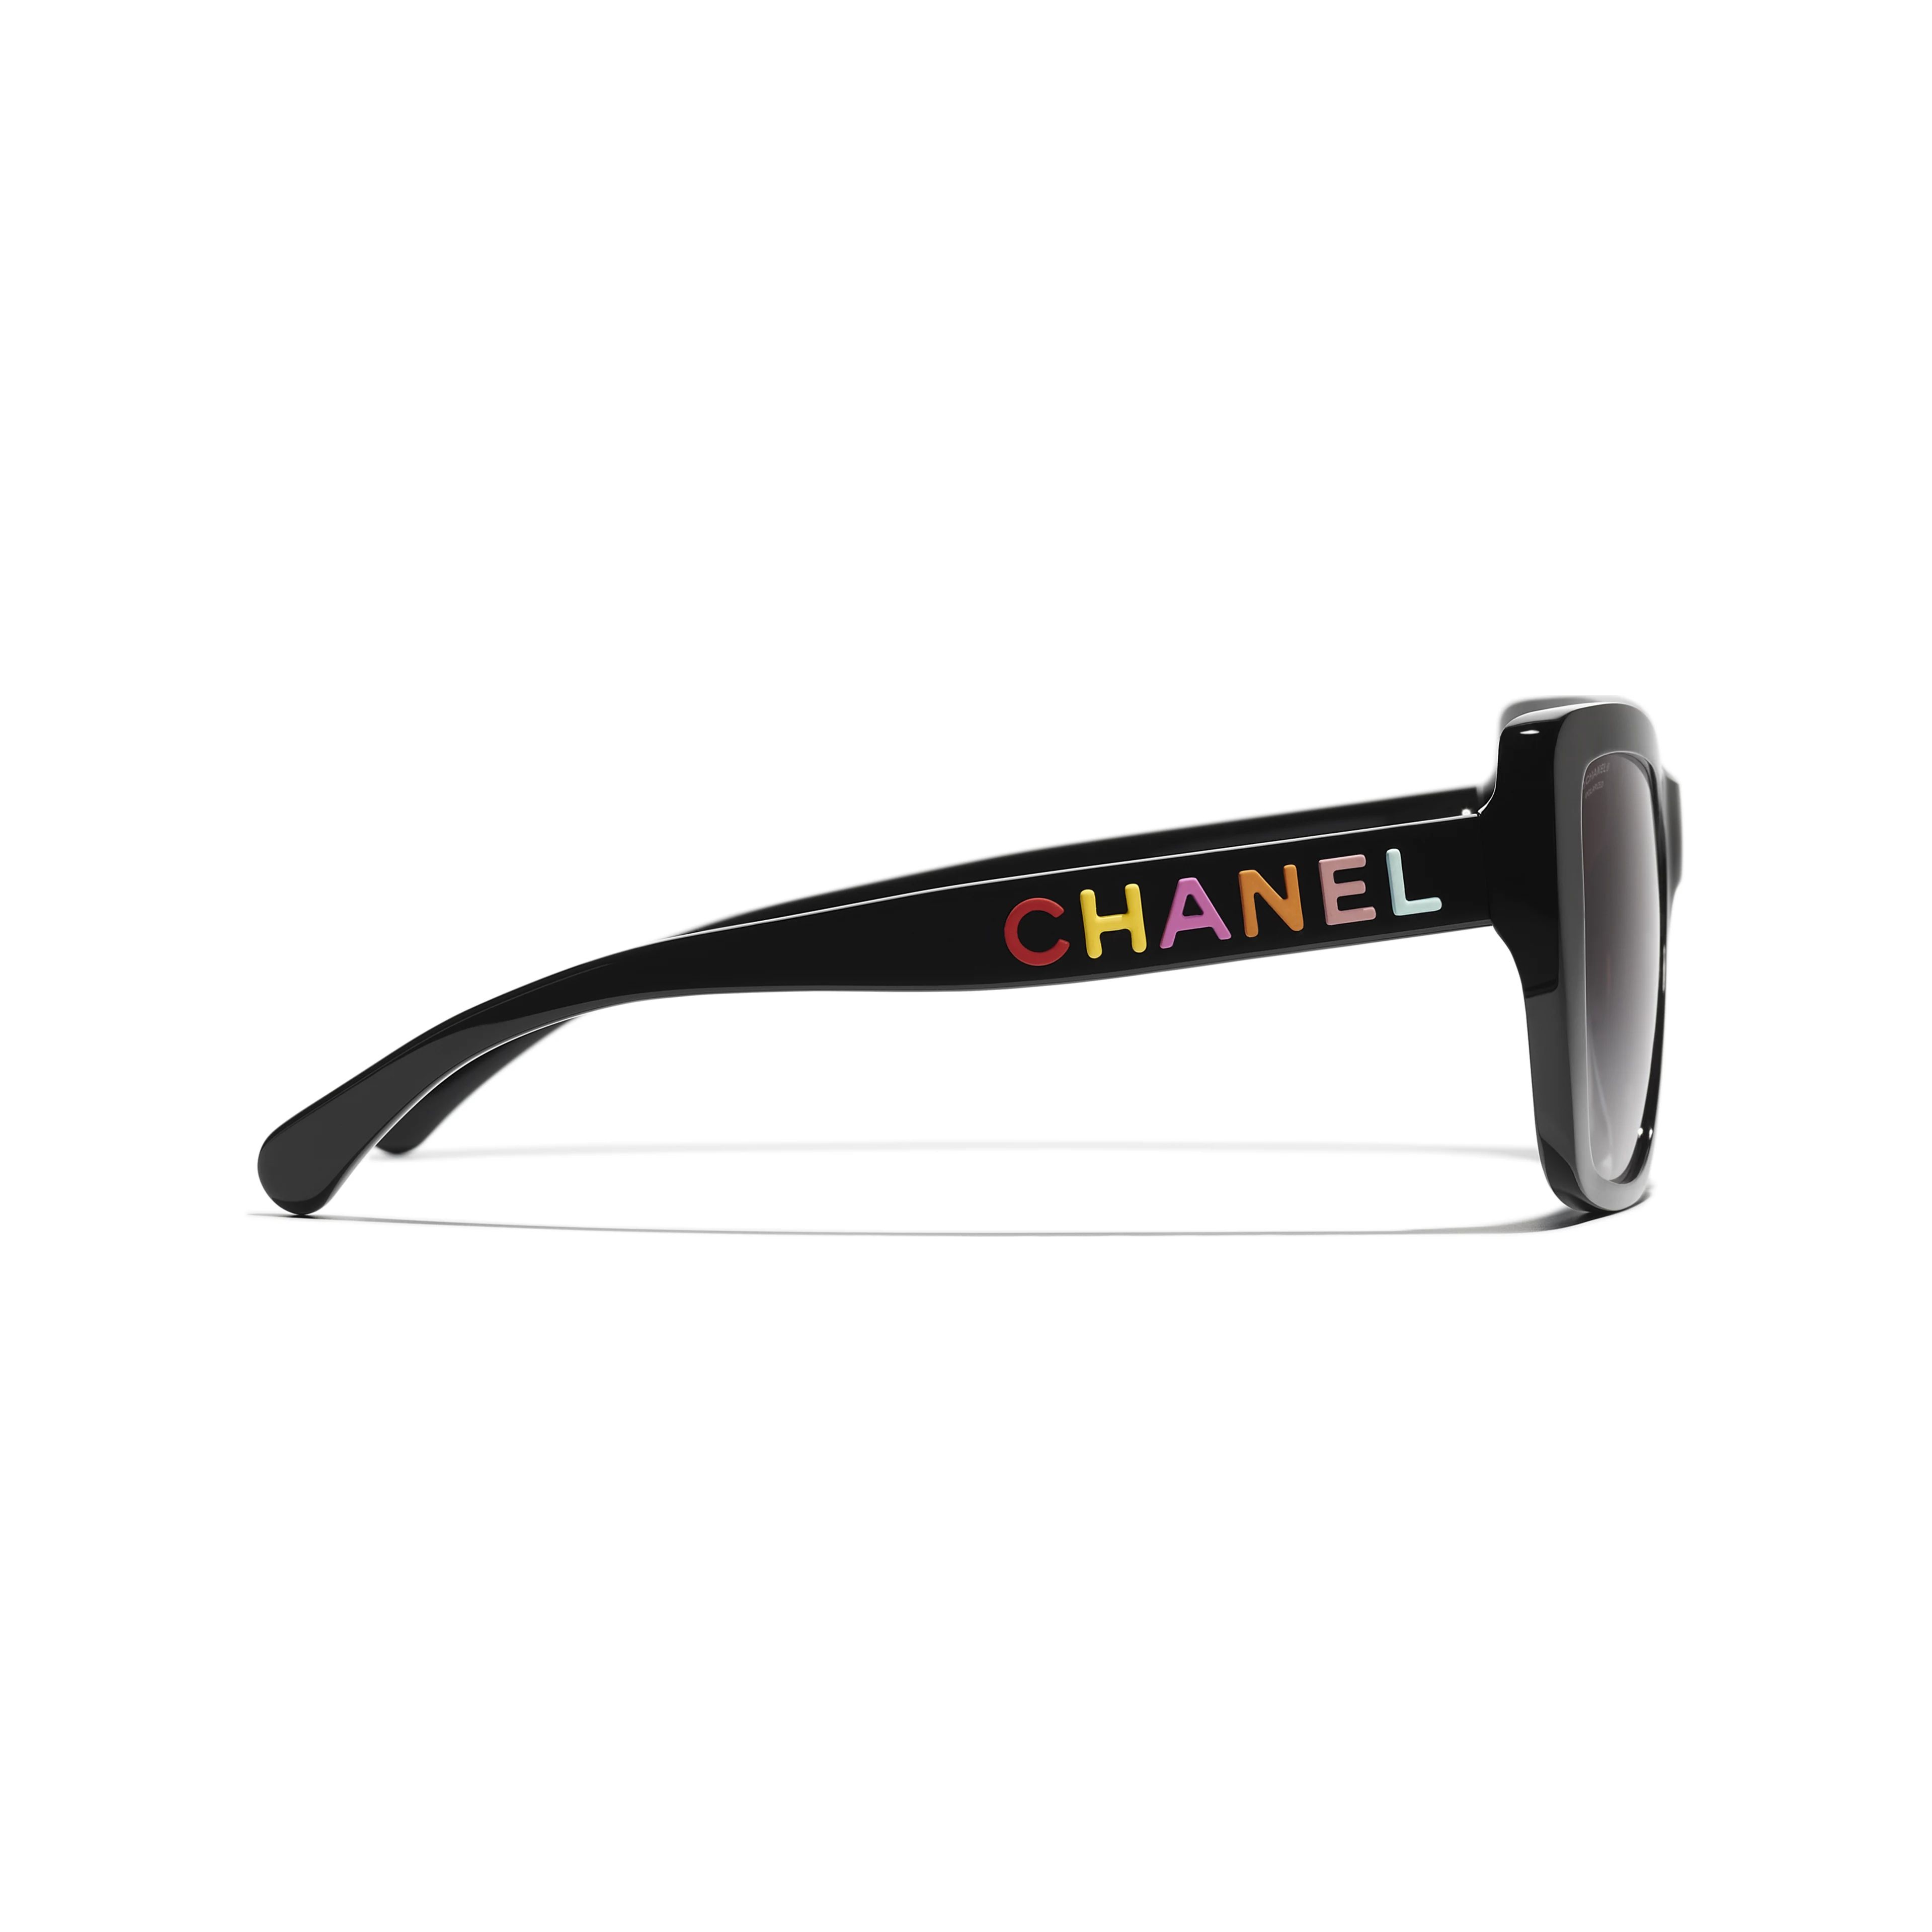 Sunglasses: Butterfly Sunglasses, acetate — Fashion | CHANEL | Chanel, Inc. (US)